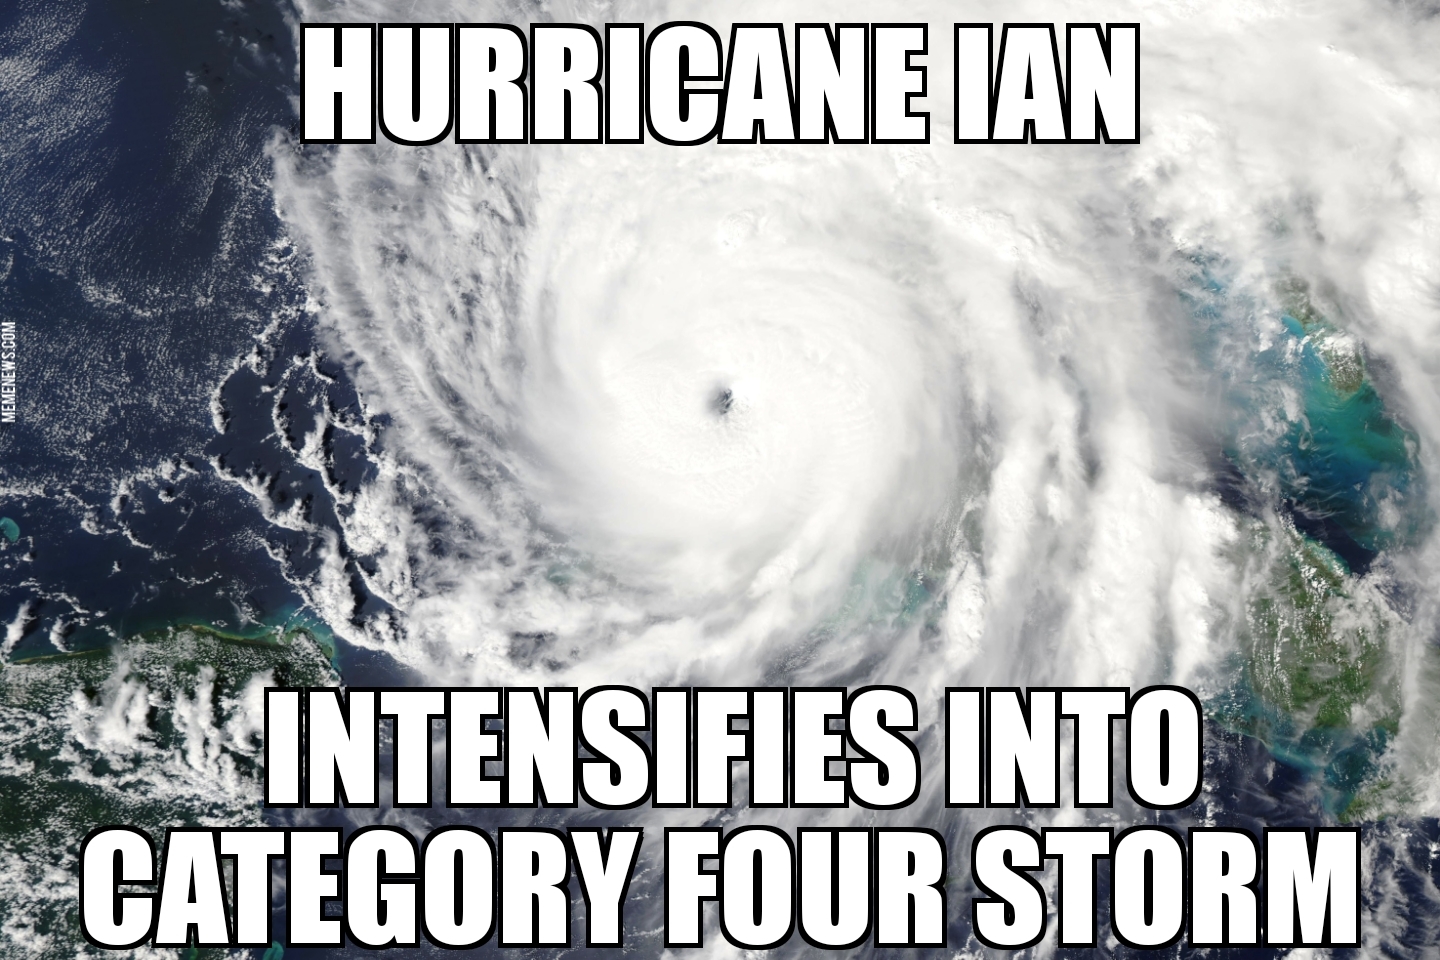 Hurricane Ian intensifies